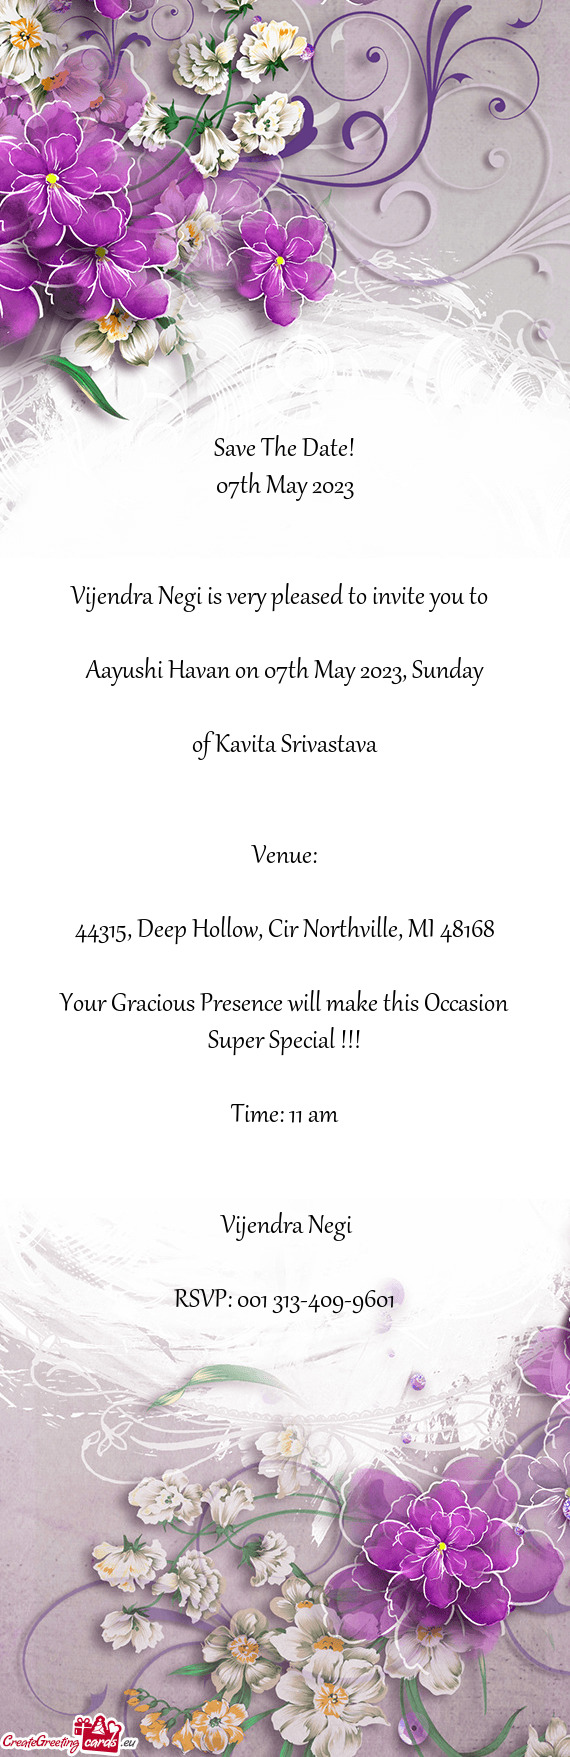 Vijendra Negi is very pleased to invite you to